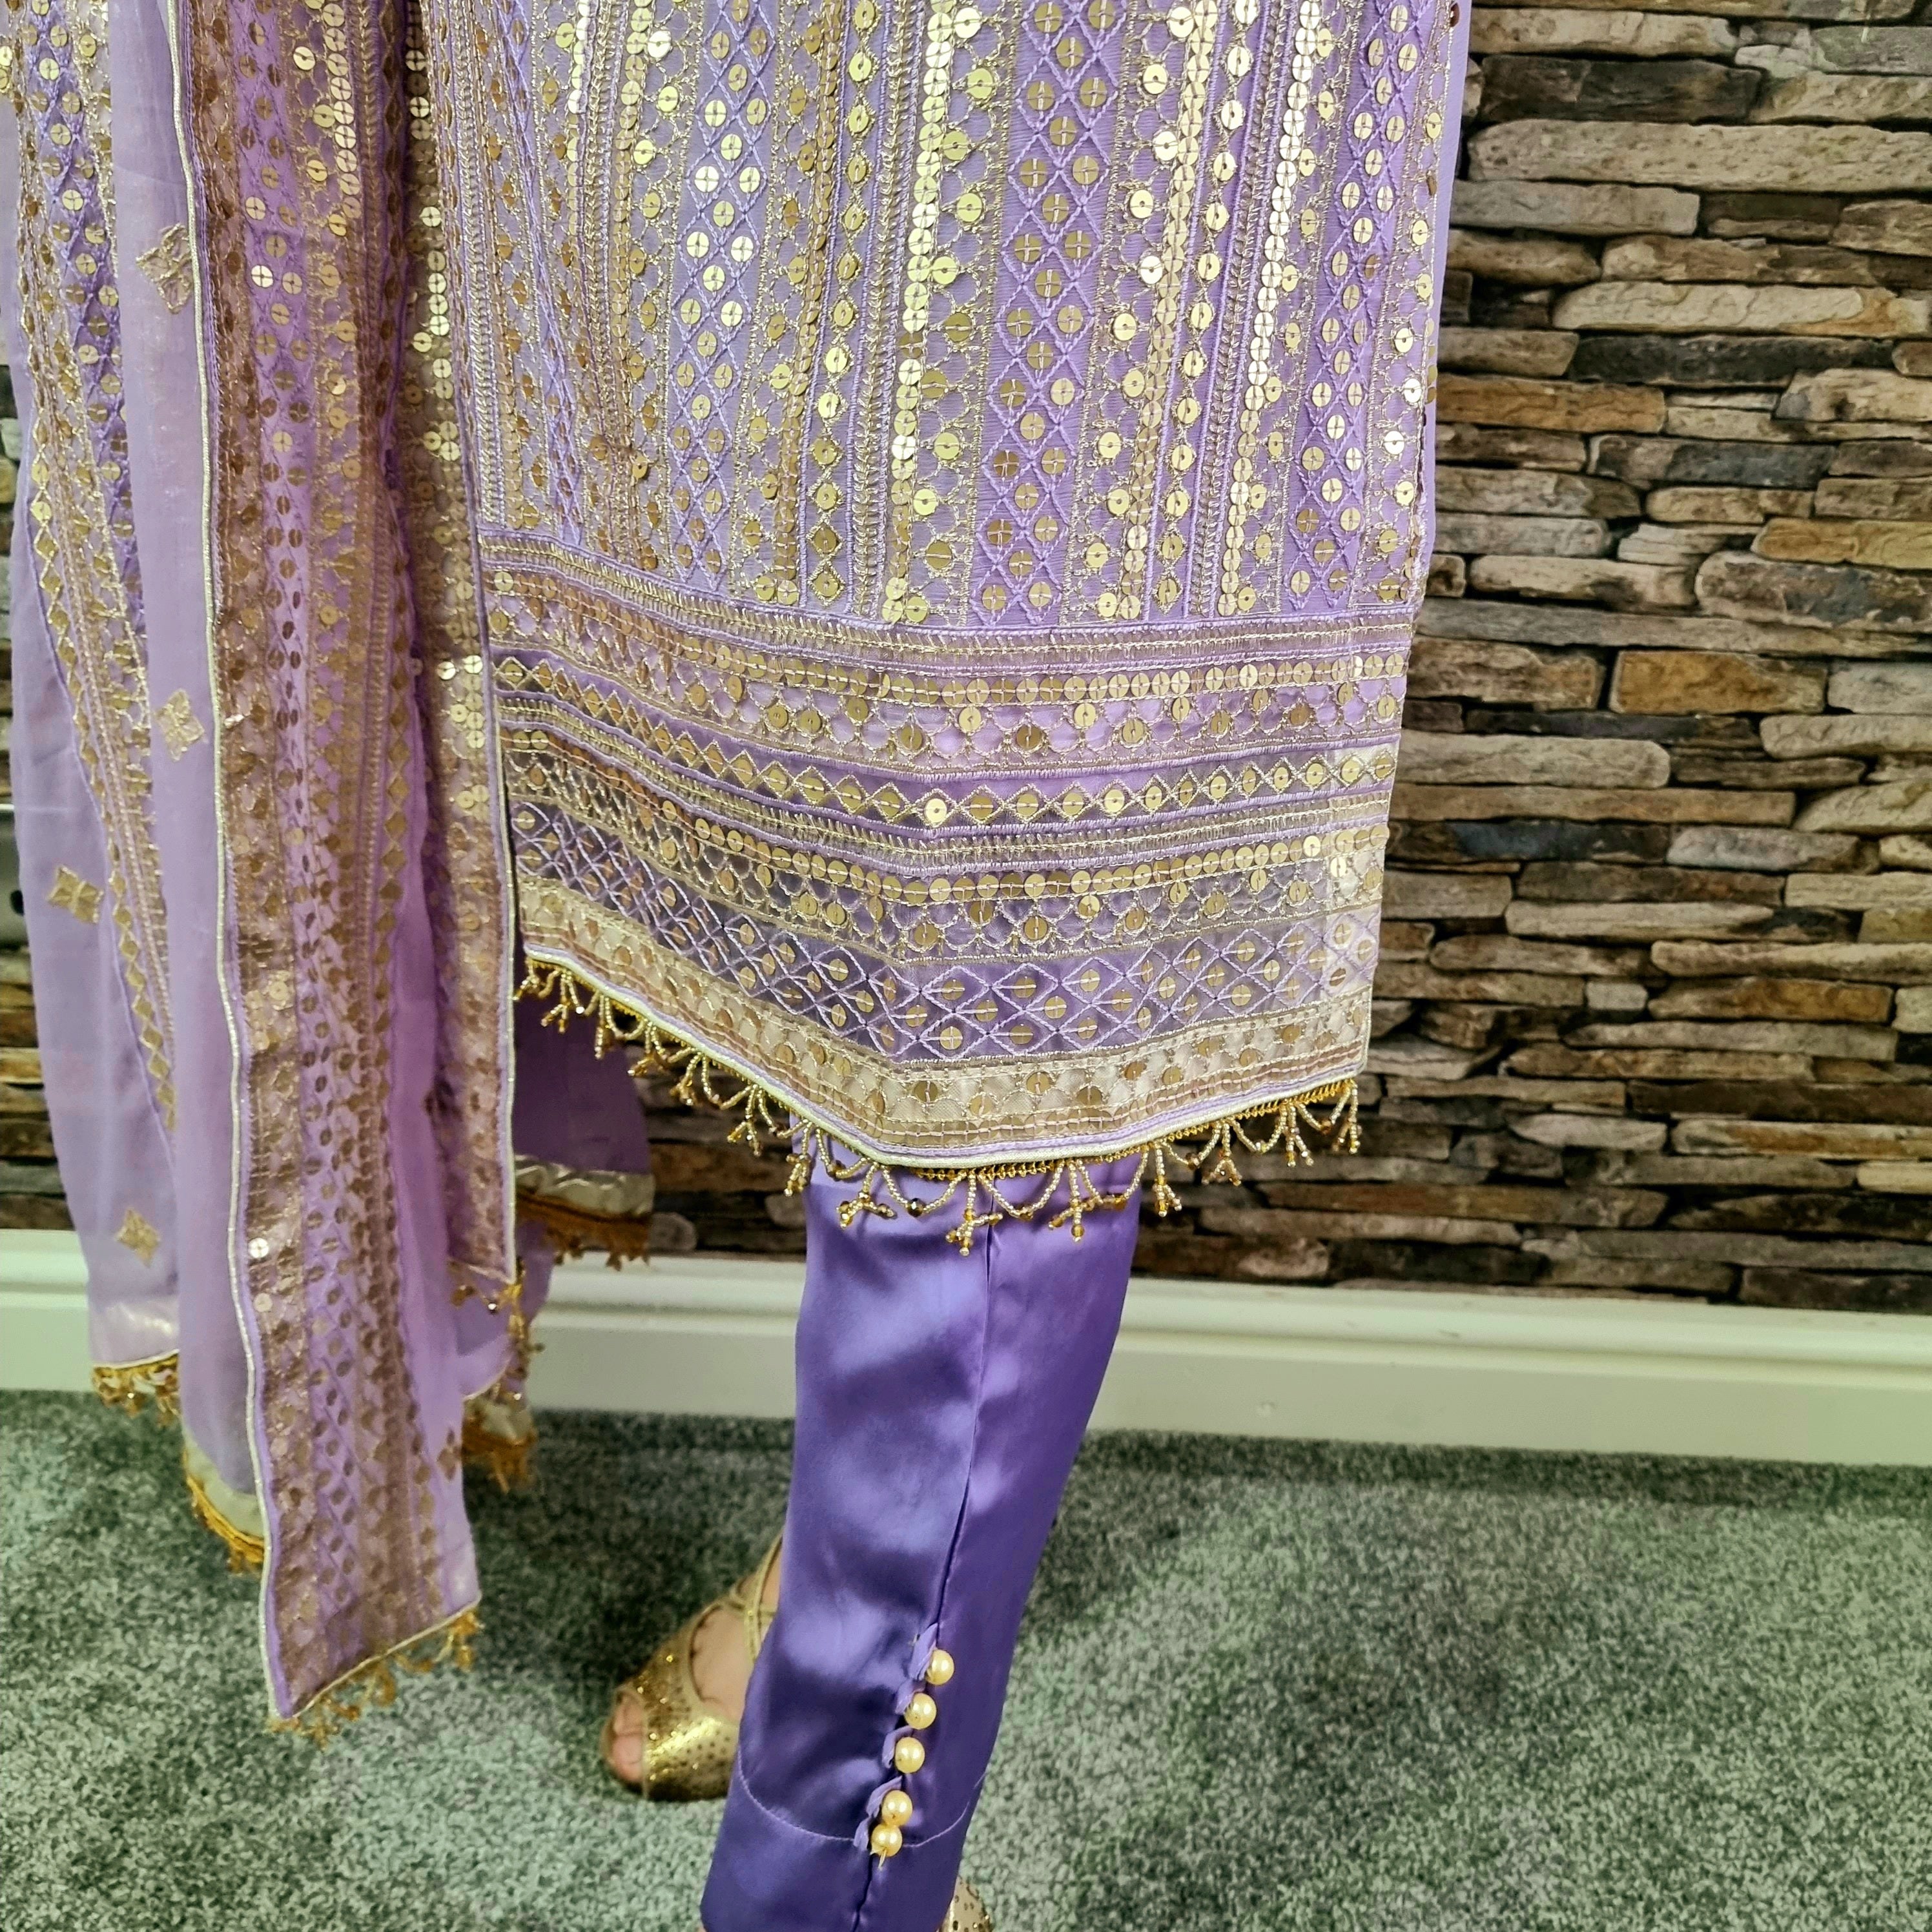 Sehriaraz Lilac sequenced Dress Designer Salwar Kameez Shalwar PKS-LILAC